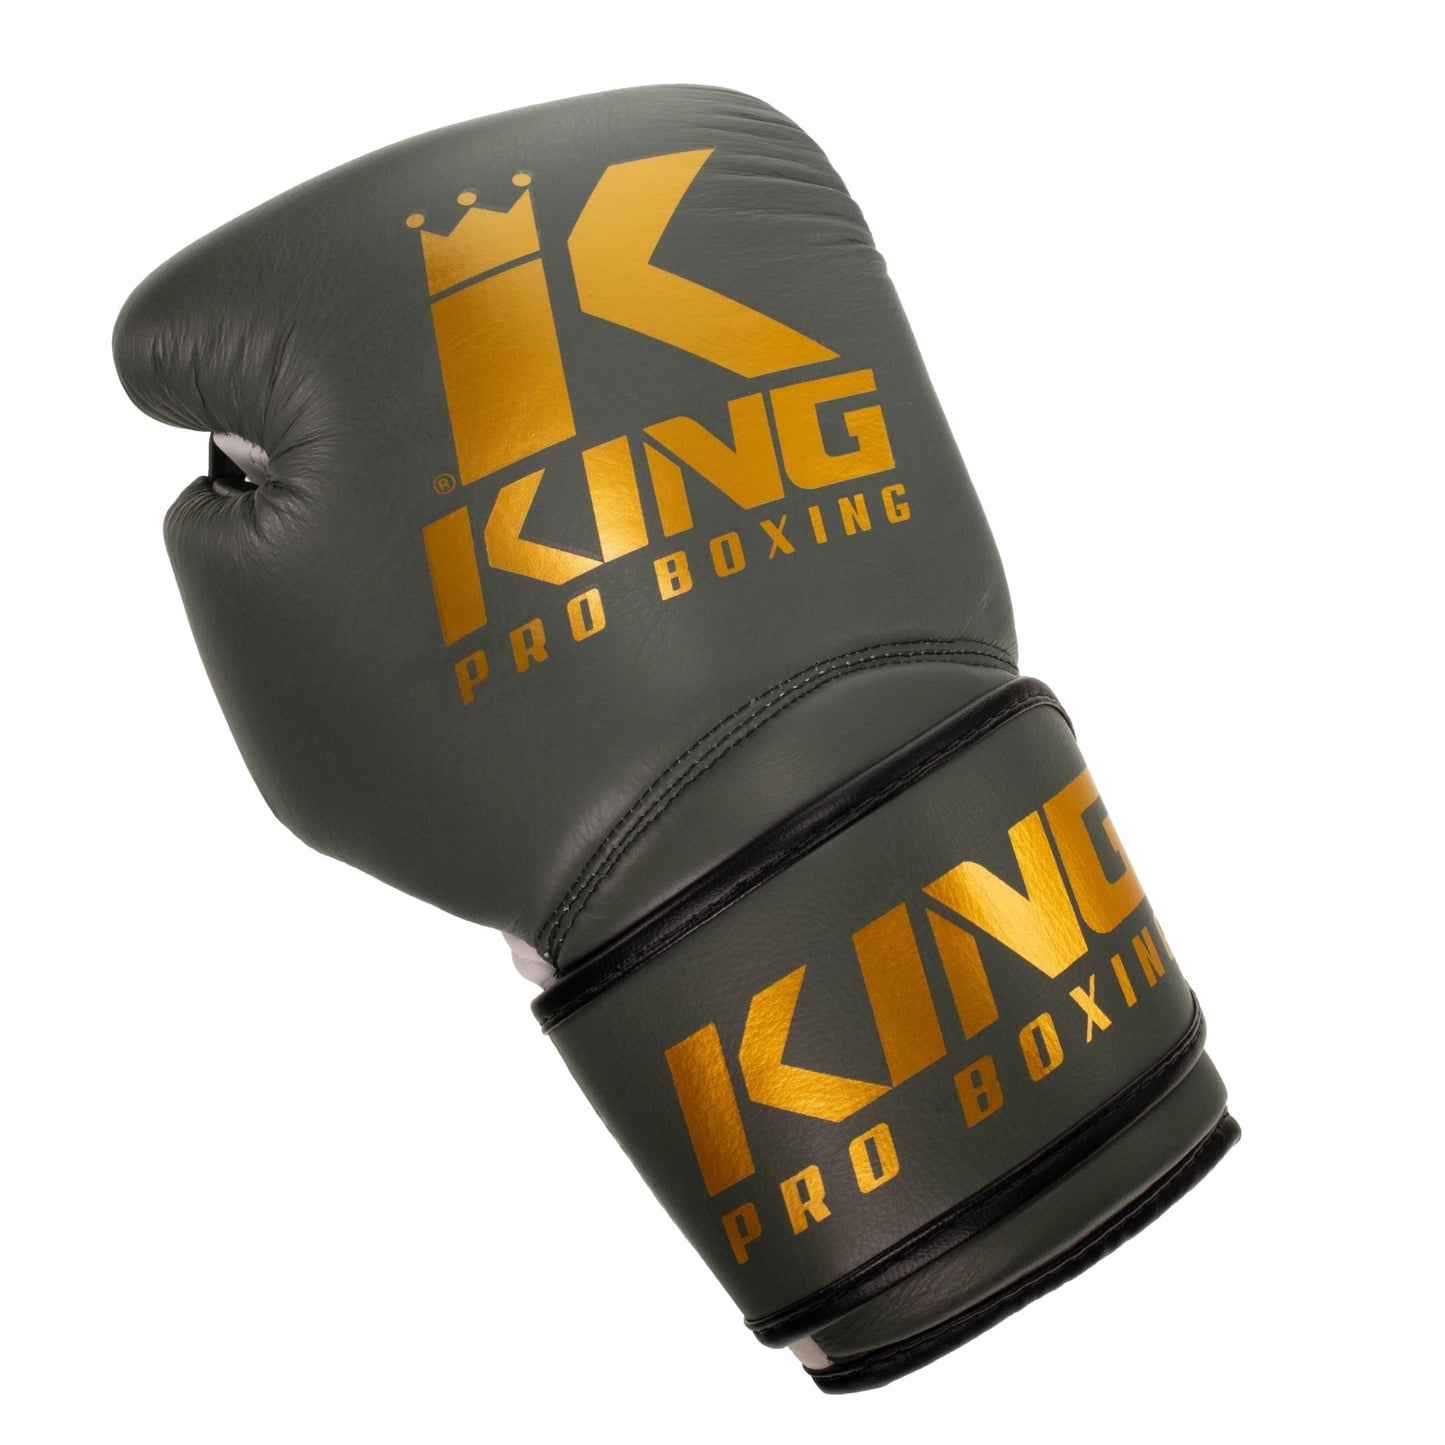 King Pro Boxing Gloves Star7 King Pro Boxing